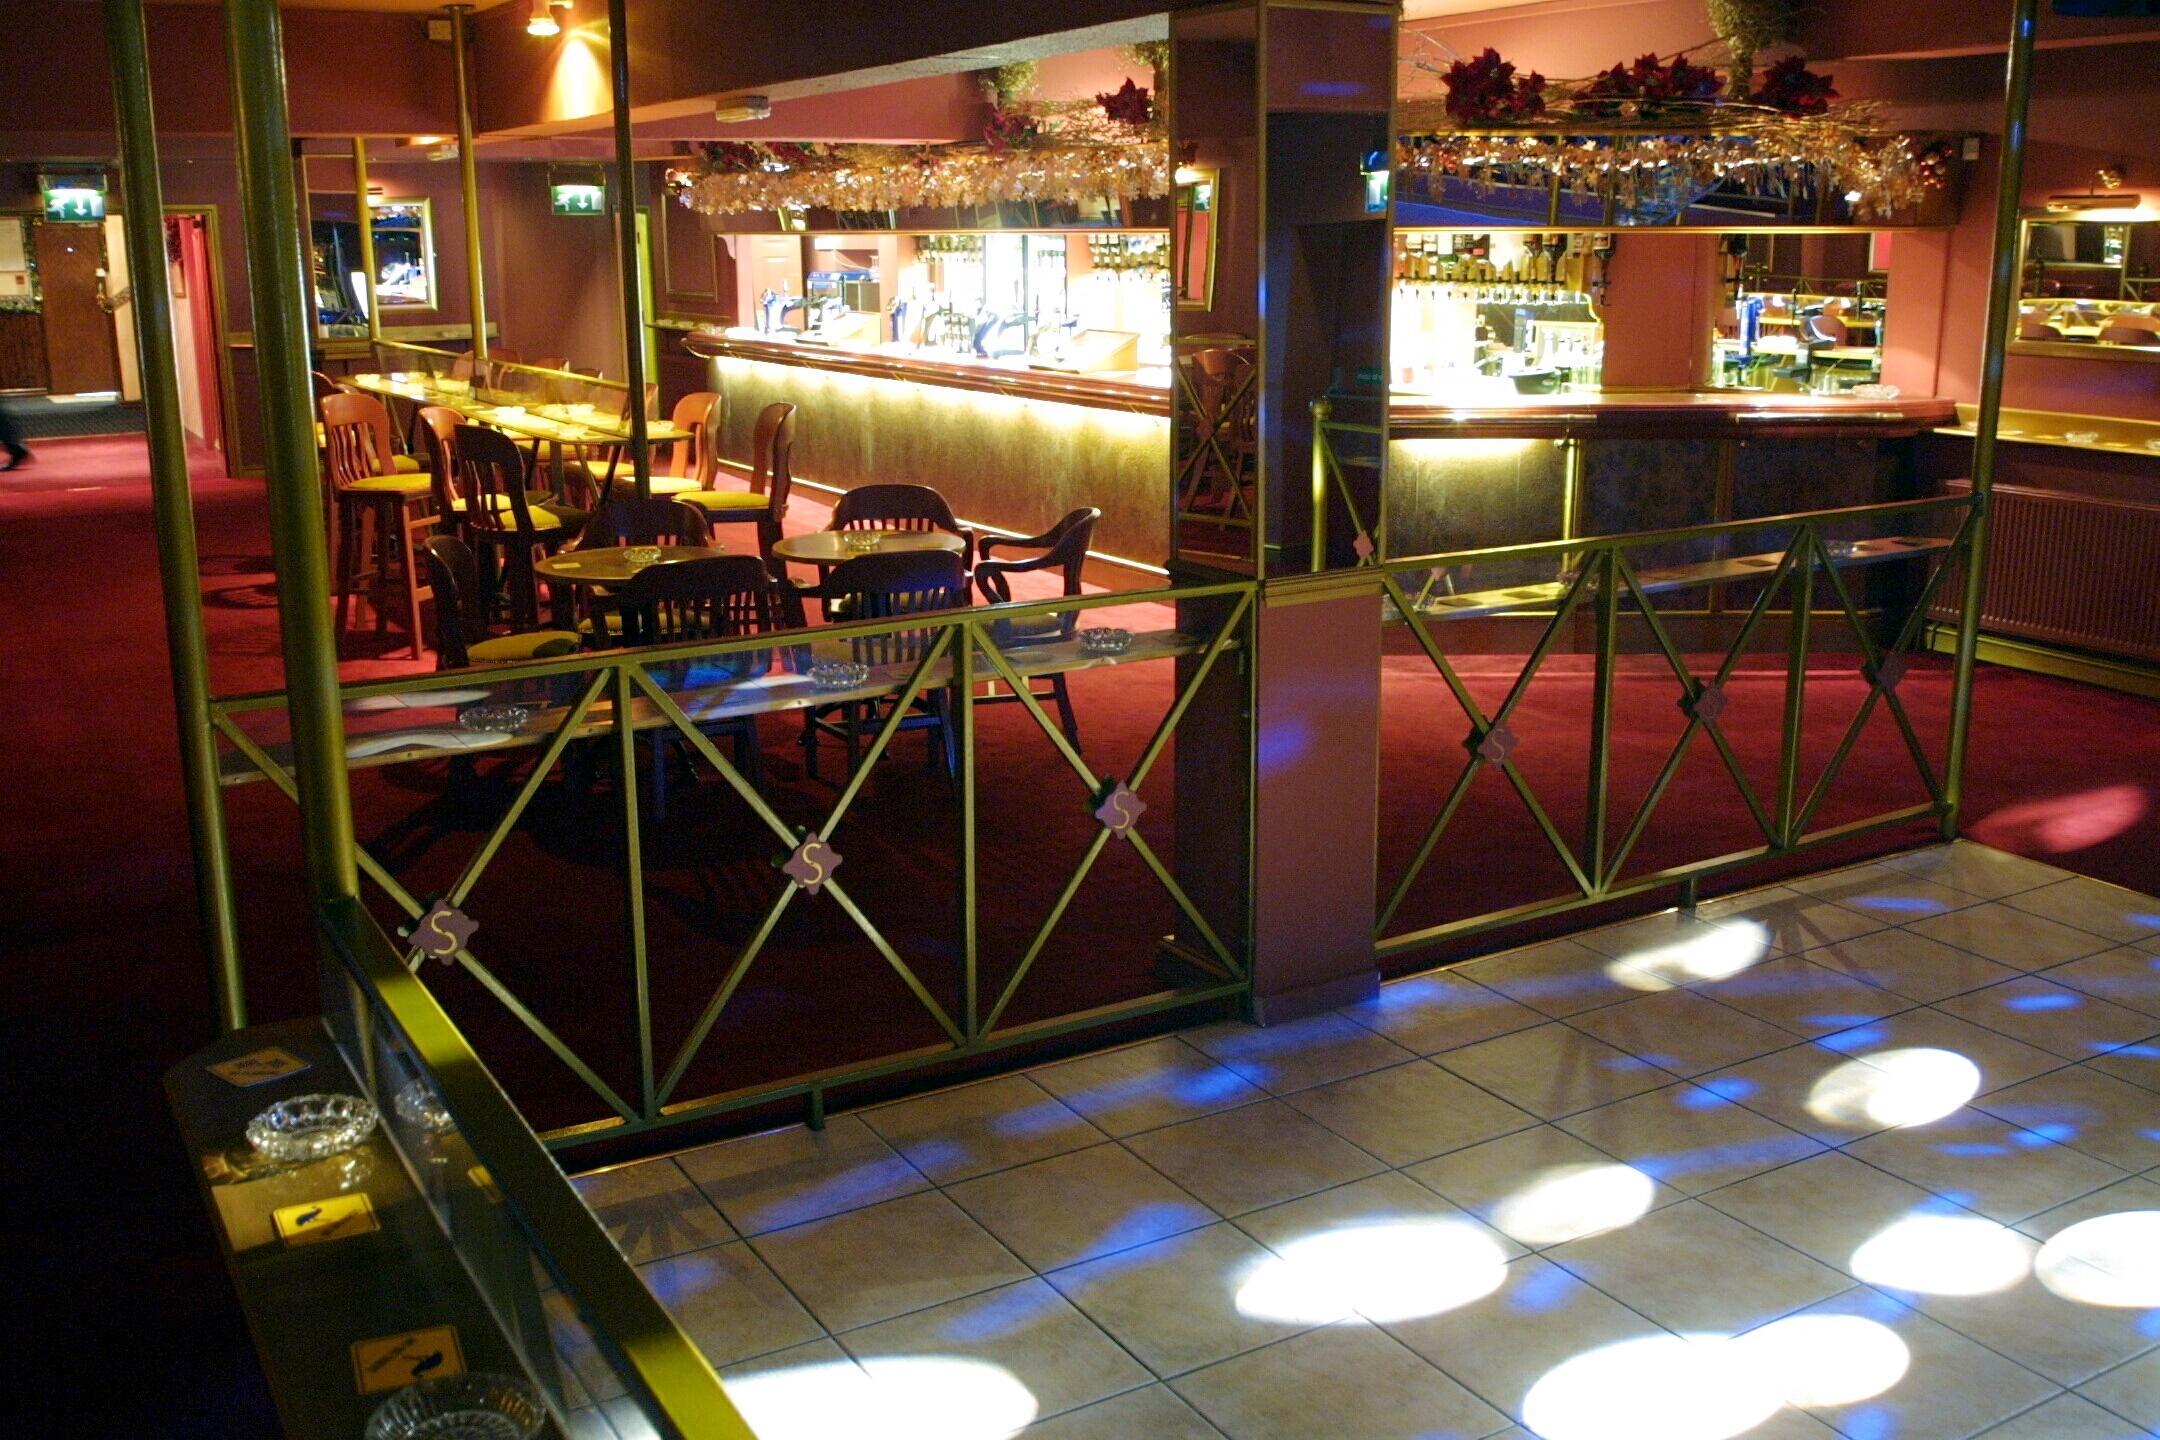 Dance floor area at Scotts nightclub, Wrexham.